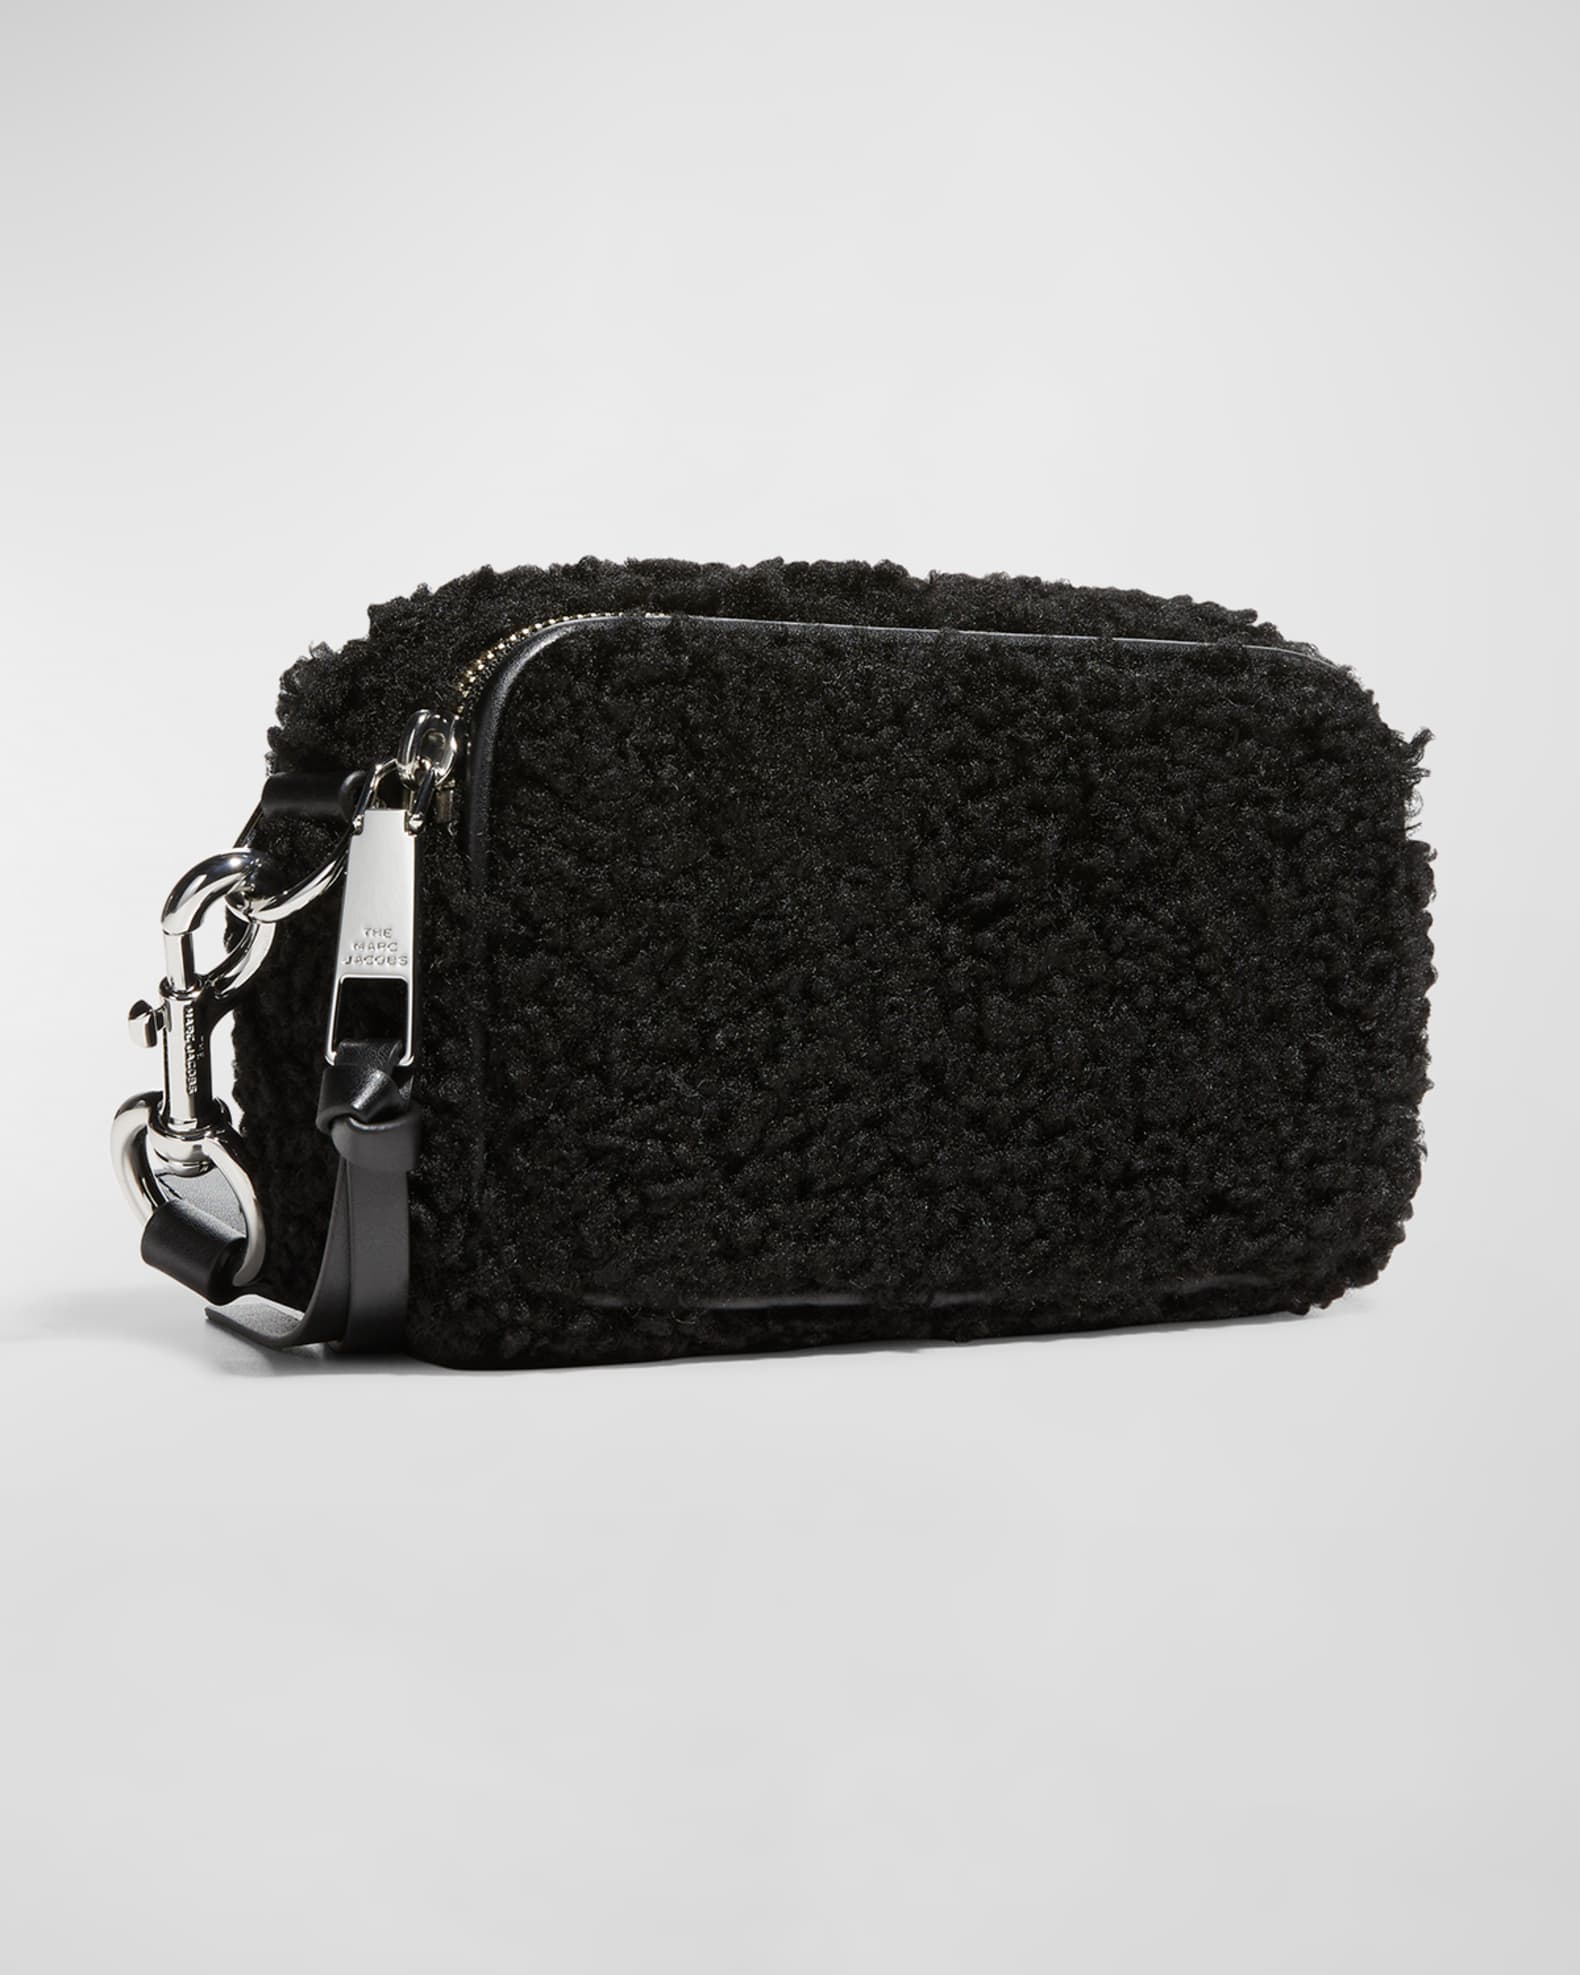 Marc Jacobs Black Teddy 'The Snapshot' Bag